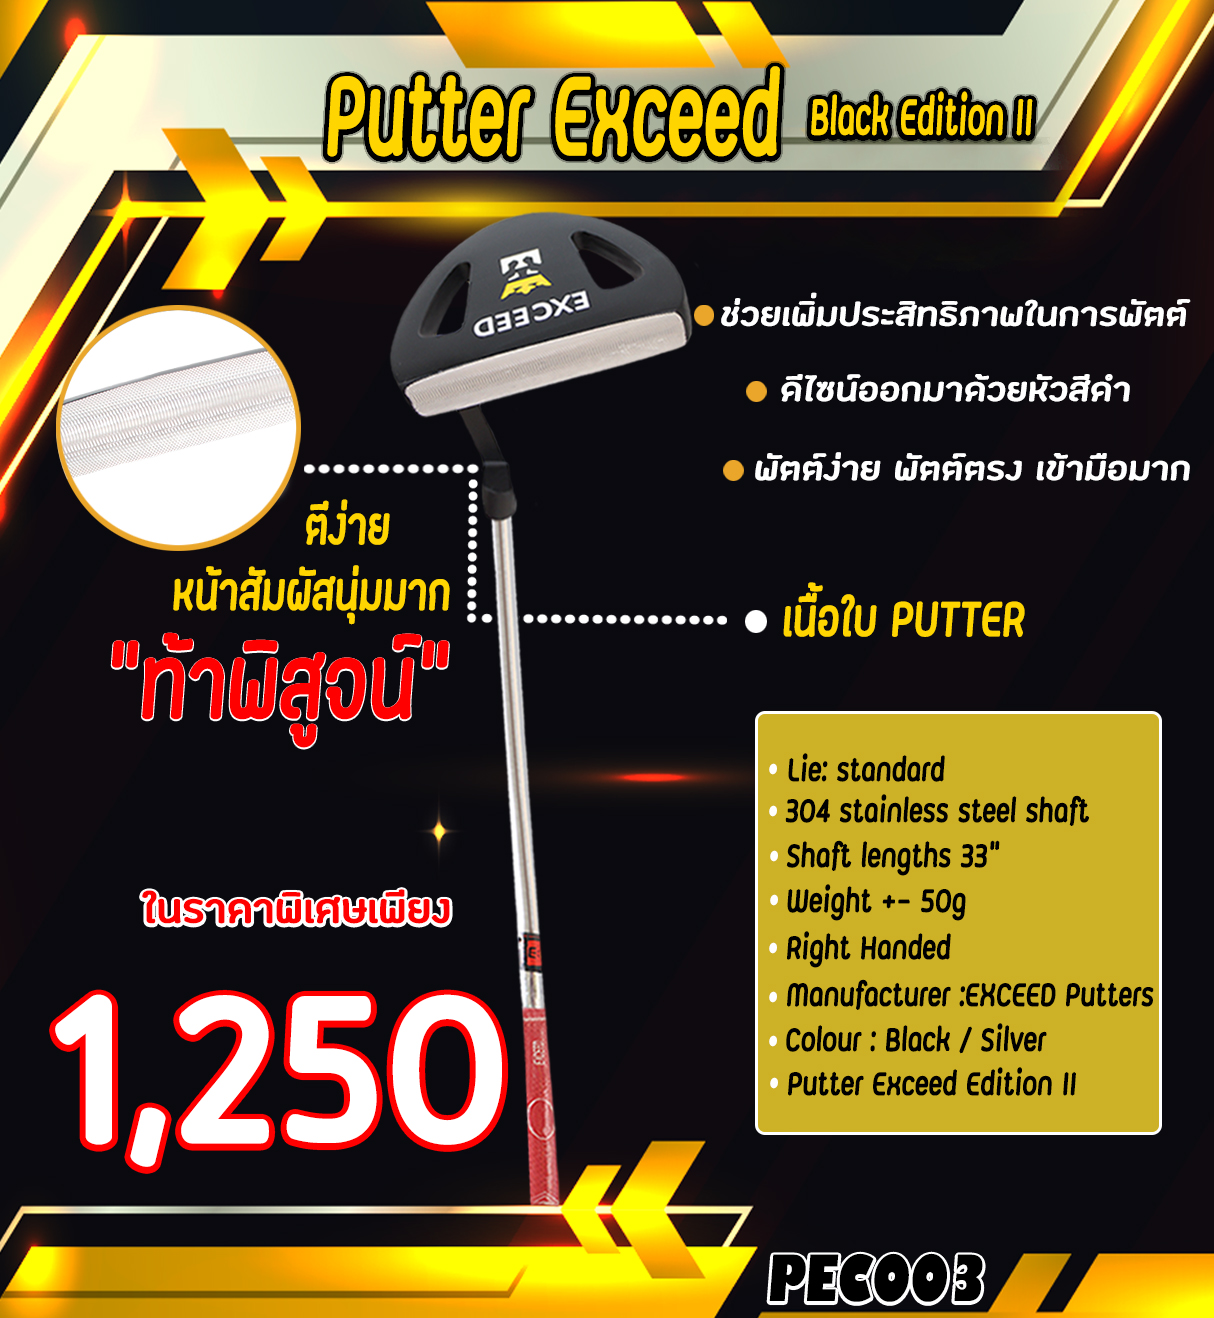 EXCEED New Version Putter Exceed Silver Edition II 2020 ไม้กอล์ฟ EXCEED ไม้พัตเตอร์ สำหรับกีฬากอล์ฟ PEC003